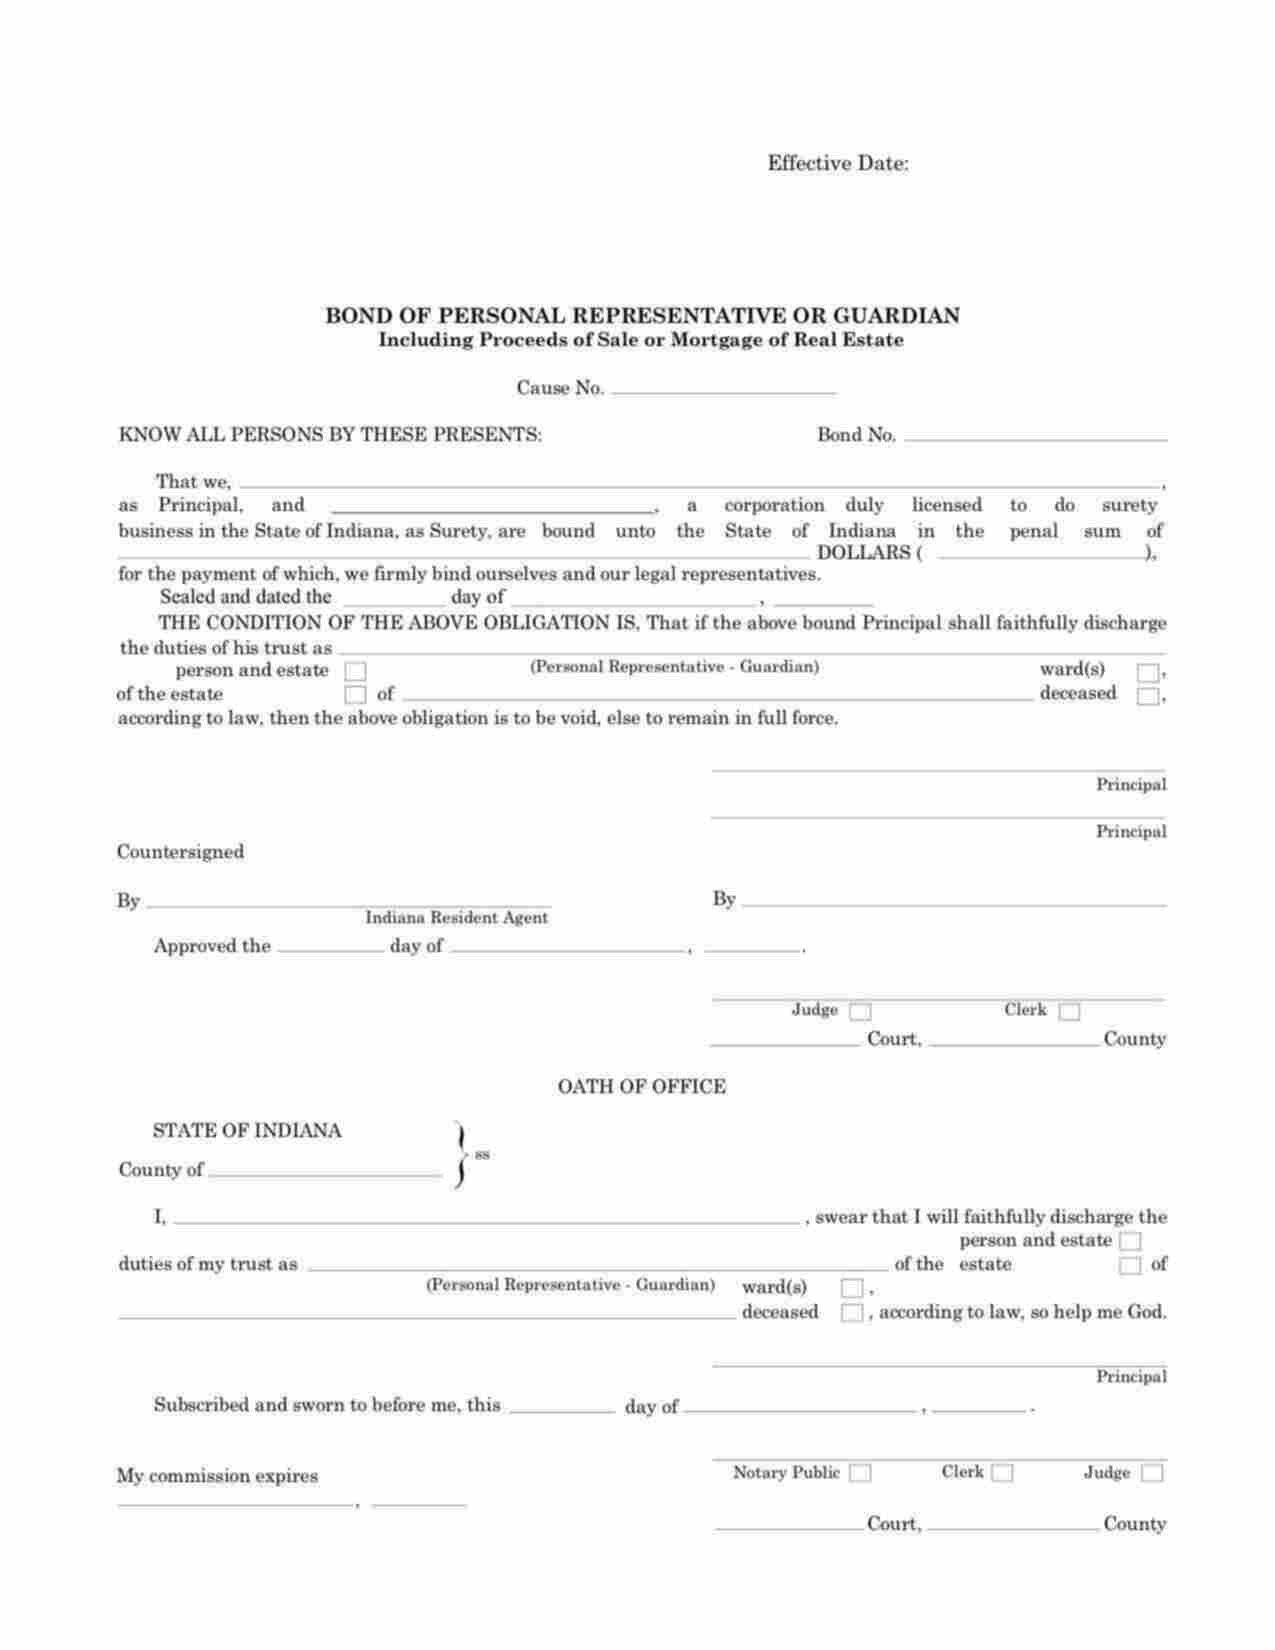 Indiana Personal Representative Bond Form